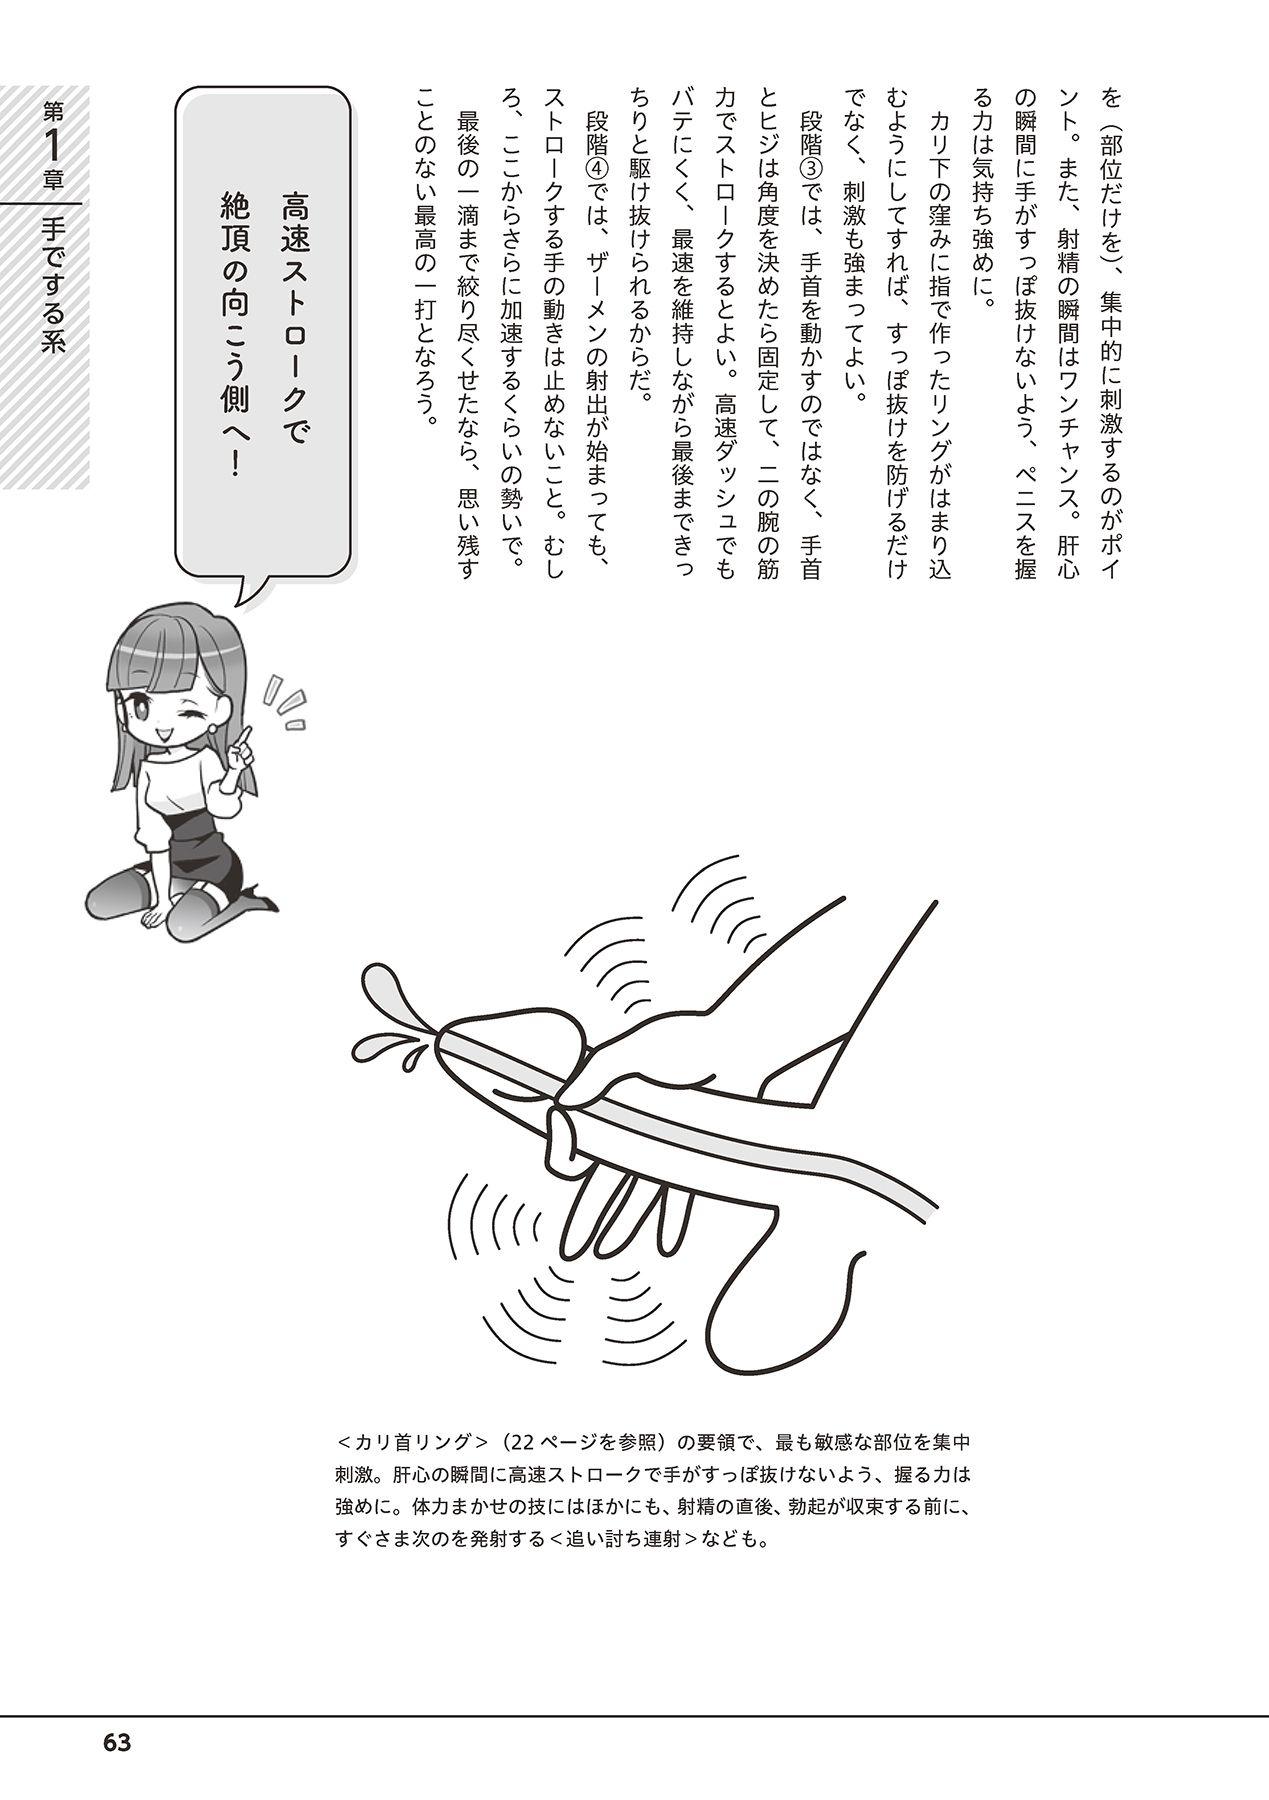 Otoko no Jii Onanie Kanzen Manual Illustration Han...... Onanie Play 64